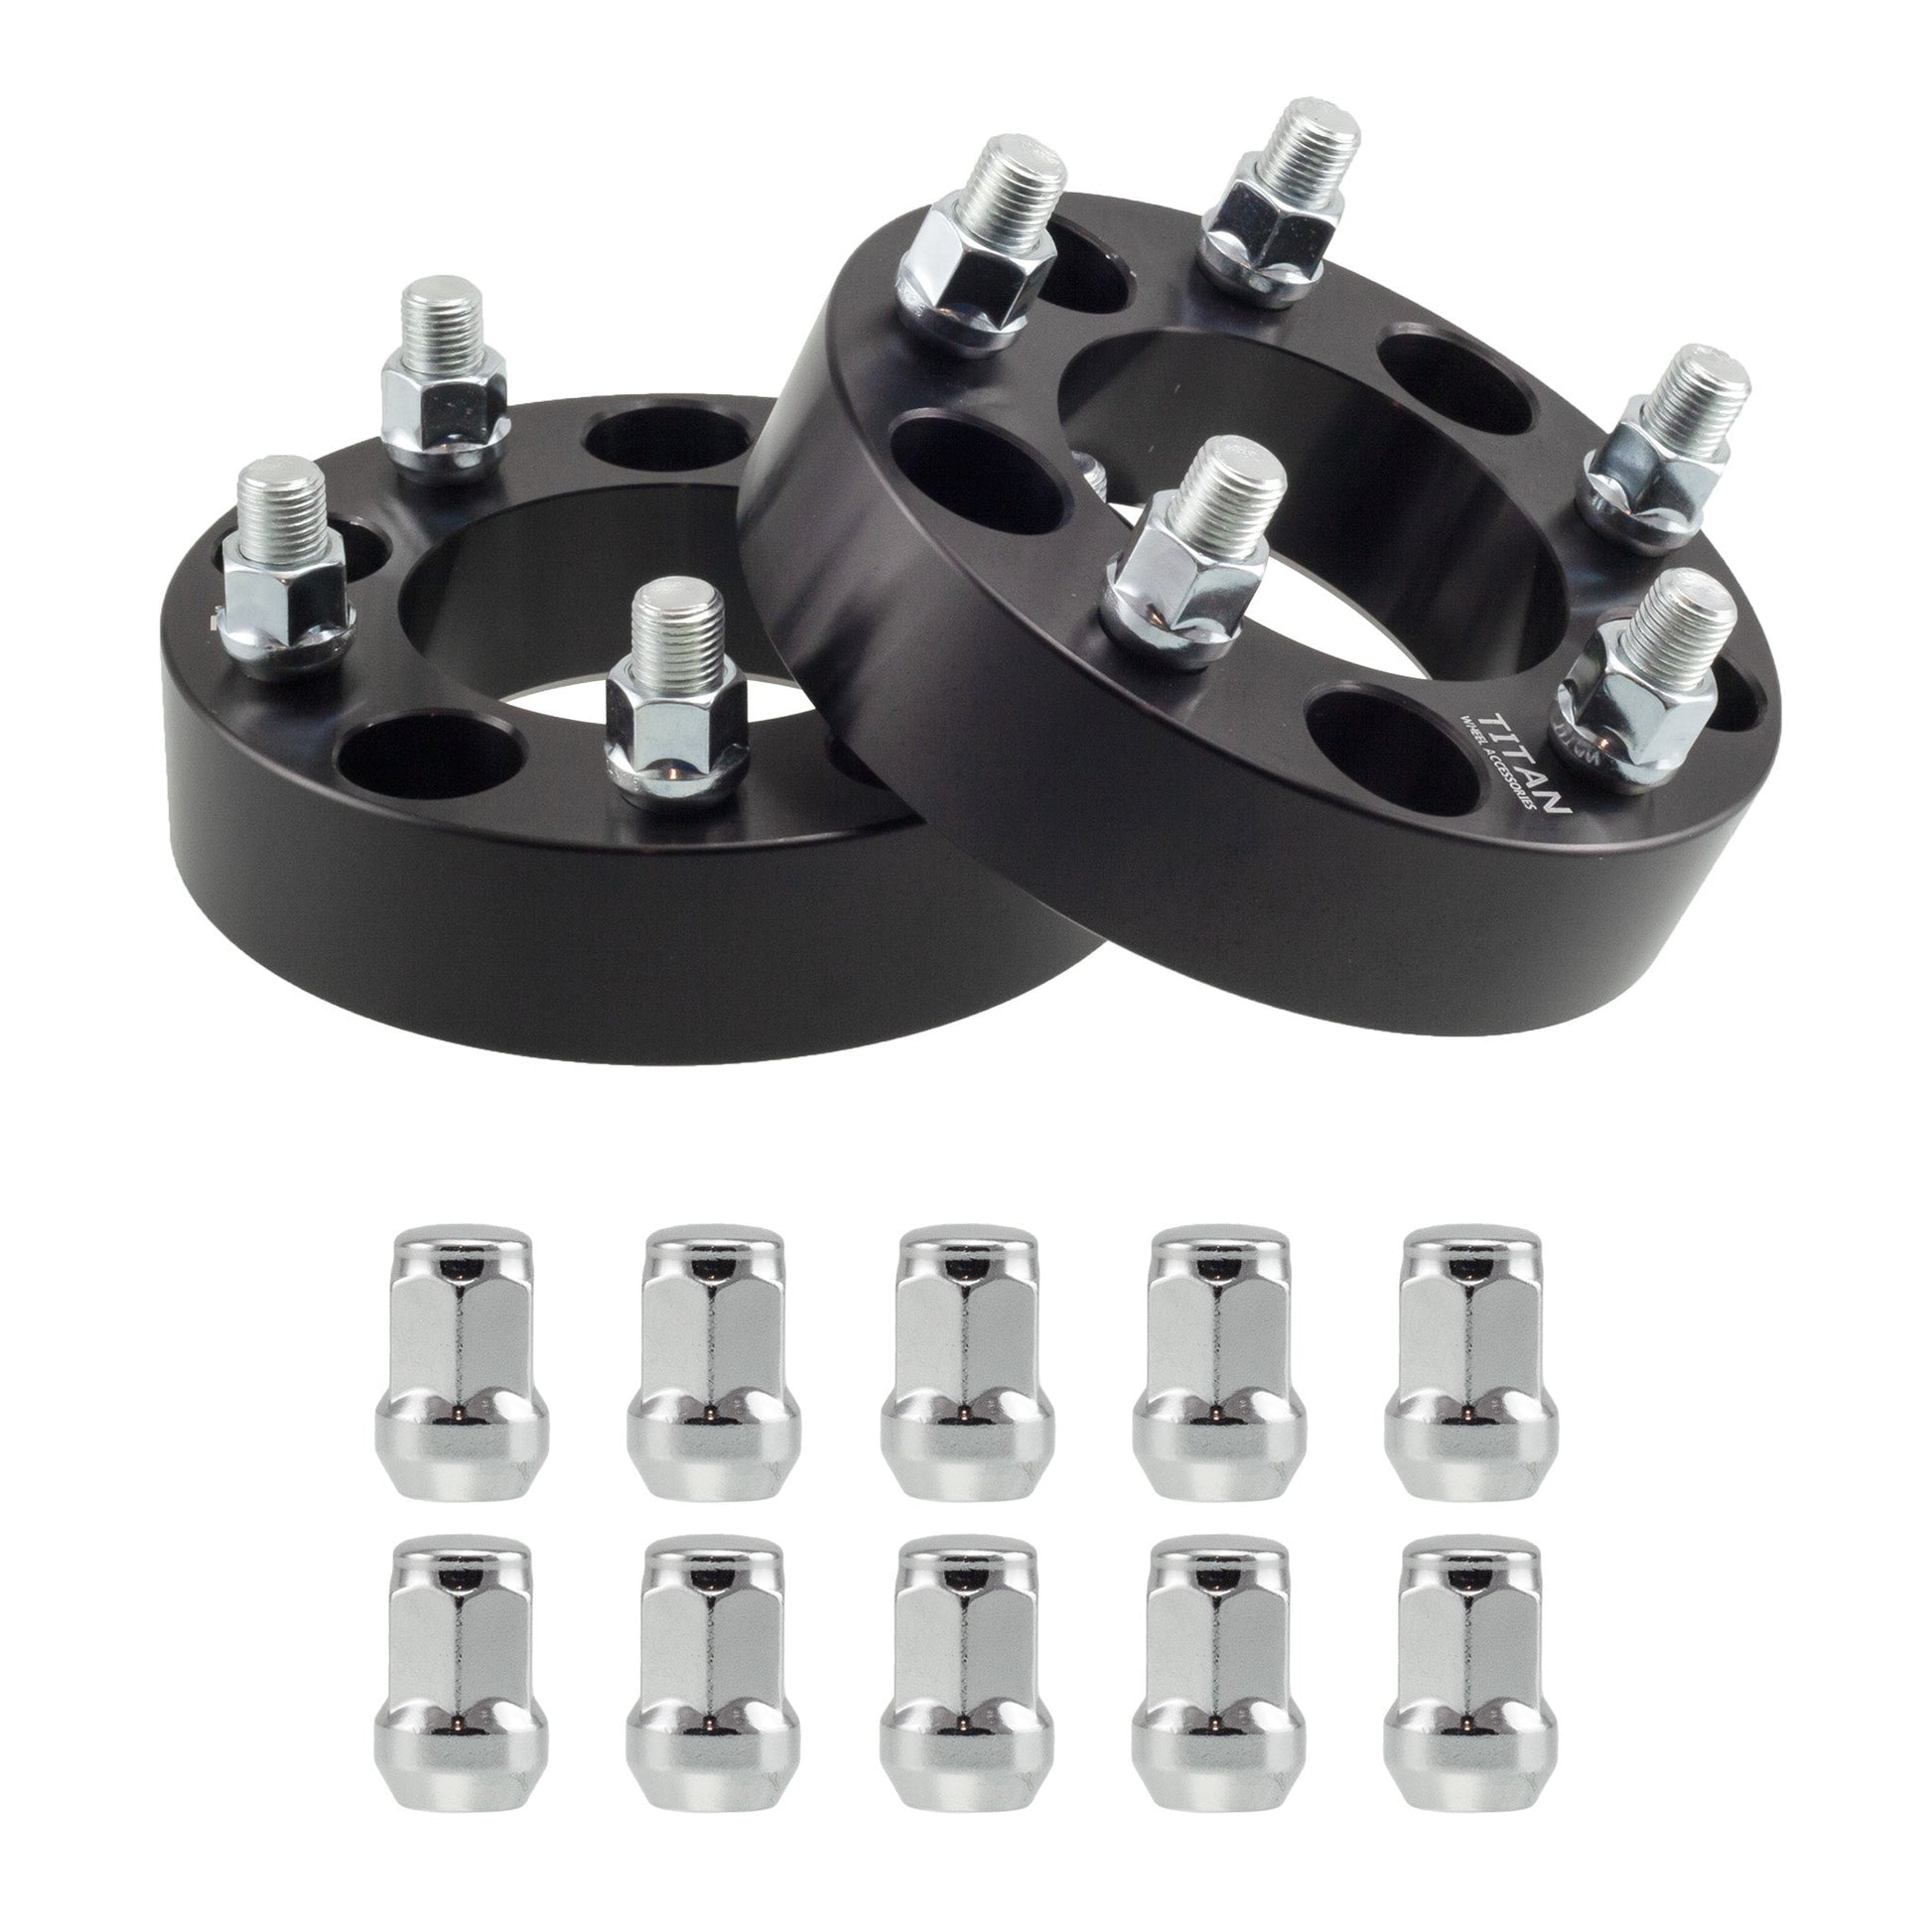 1" (25mm) Titan Wheel Spacers for Chevy Camaro Corvette S10 GMC Sonoma | 5x4.75 (5x120) | 70.5 Hubcentric |12x1.5 Studs | Titan Wheel Accessories